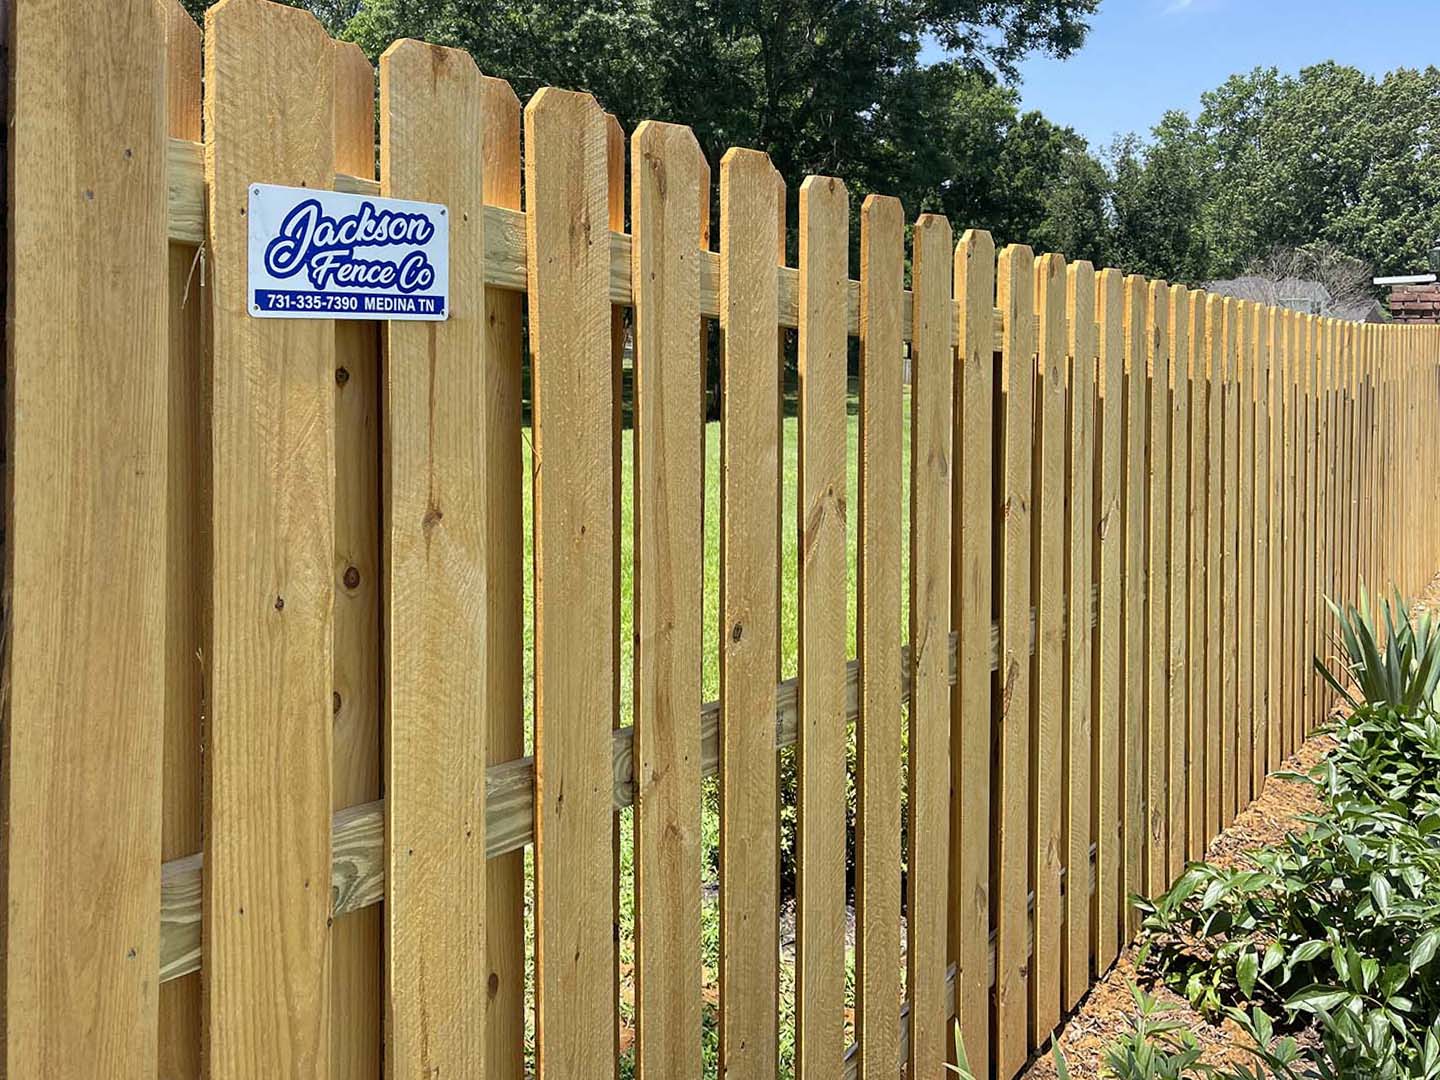  Dyersburg TN Shadowbox style wood fence